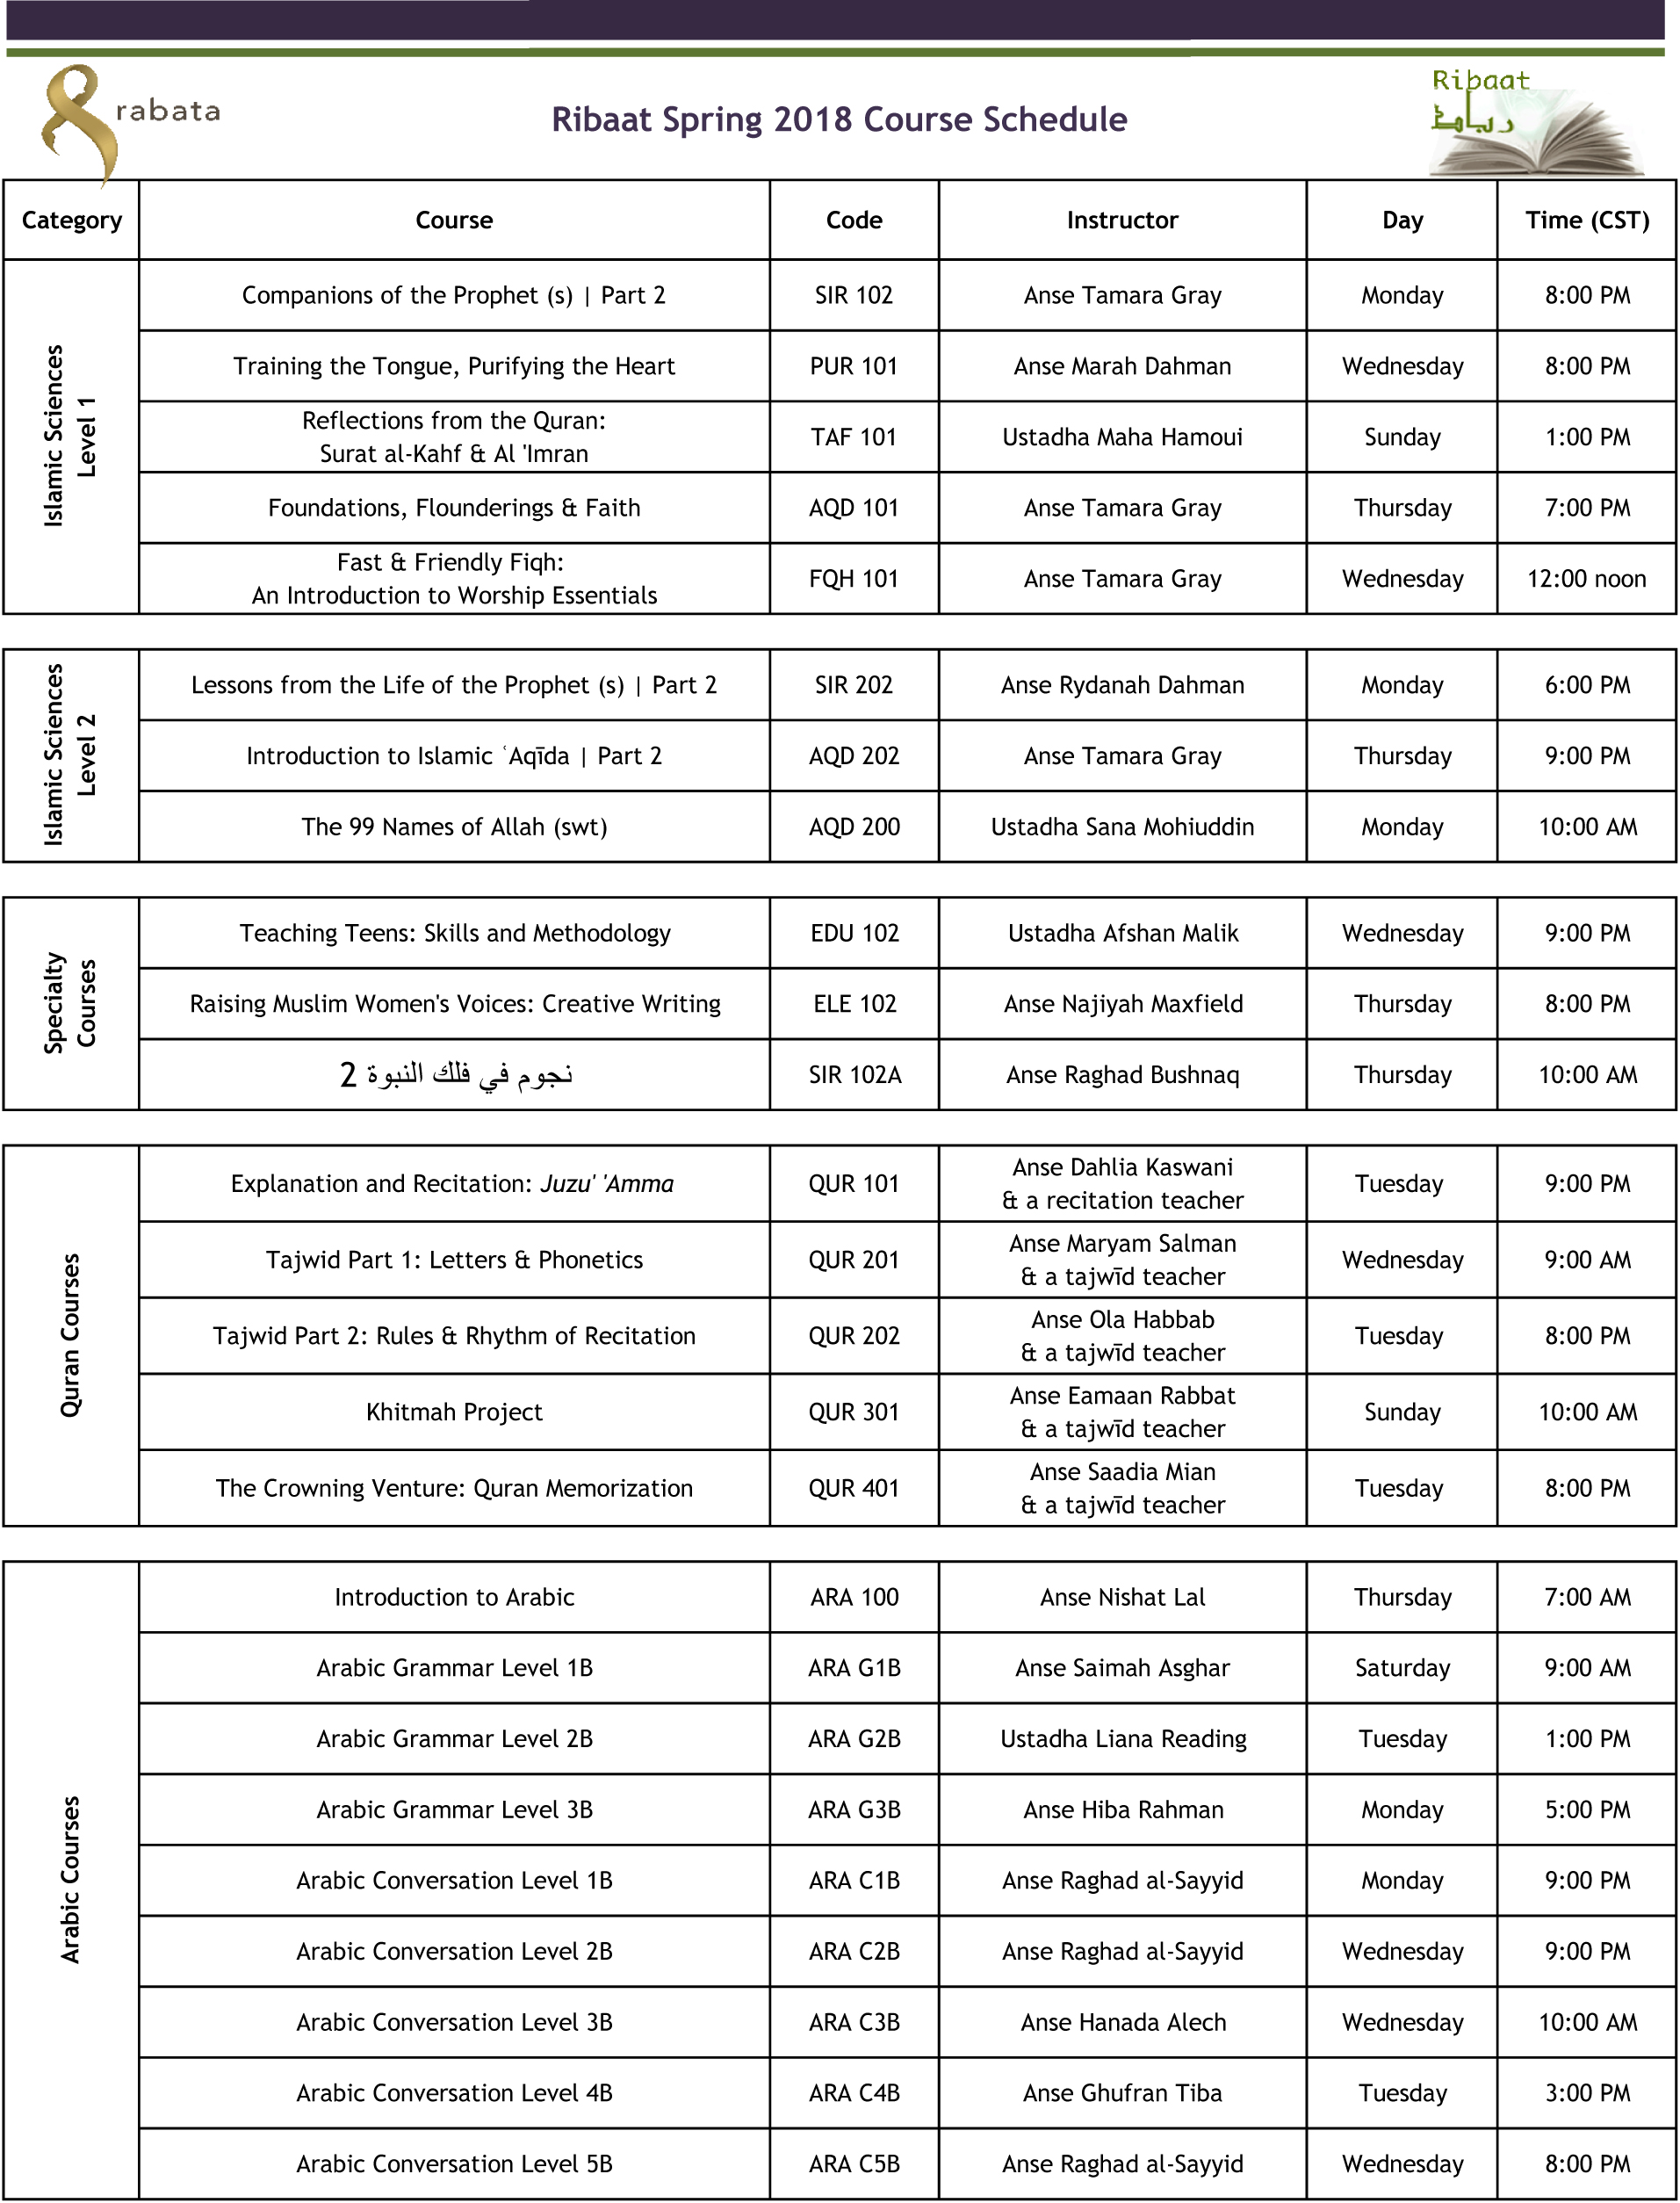 Ribaat spring 2018 course schedule